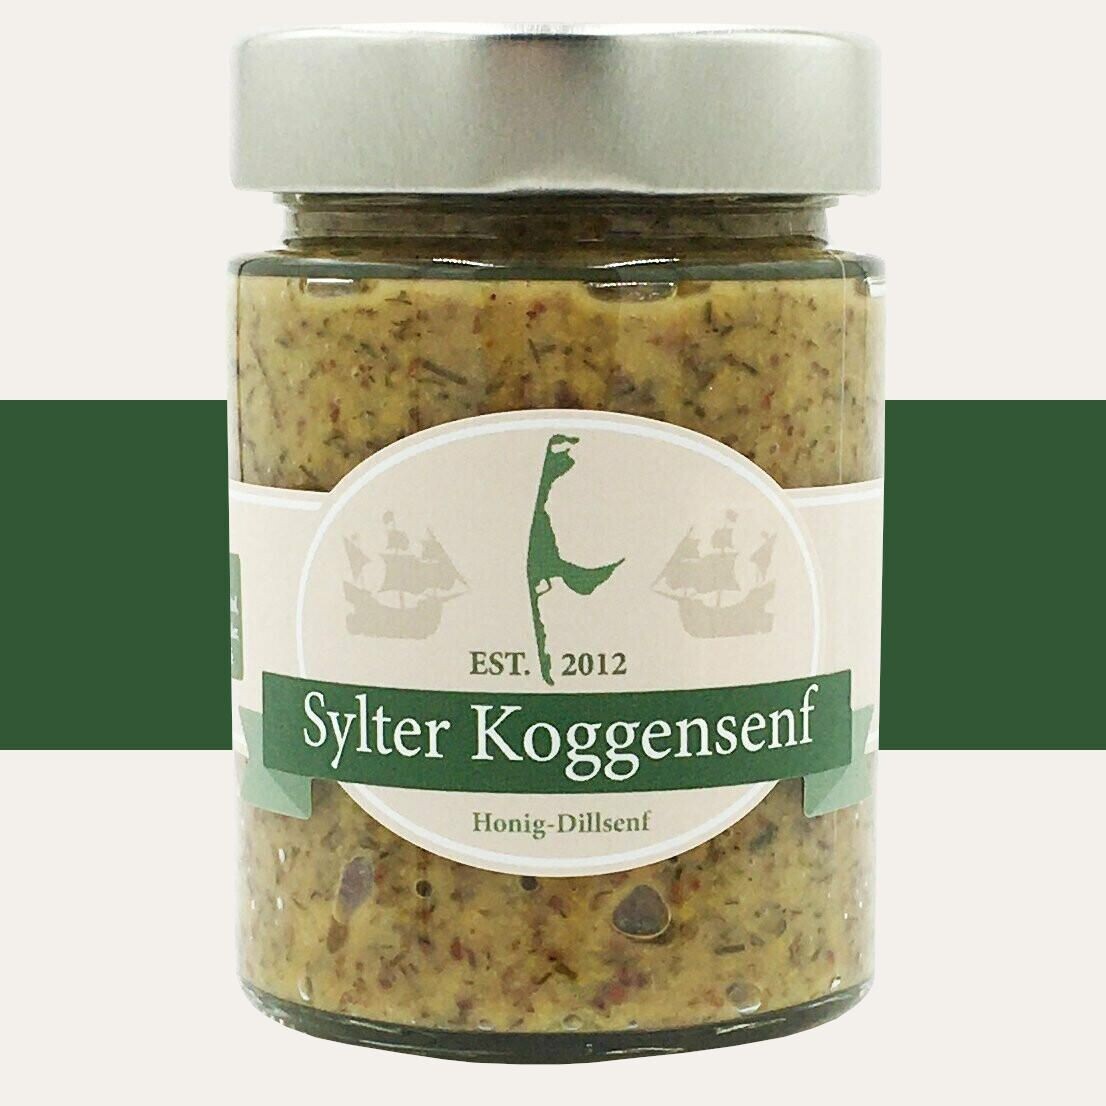 Sylter Koggensenf - Honig-Dillsenf